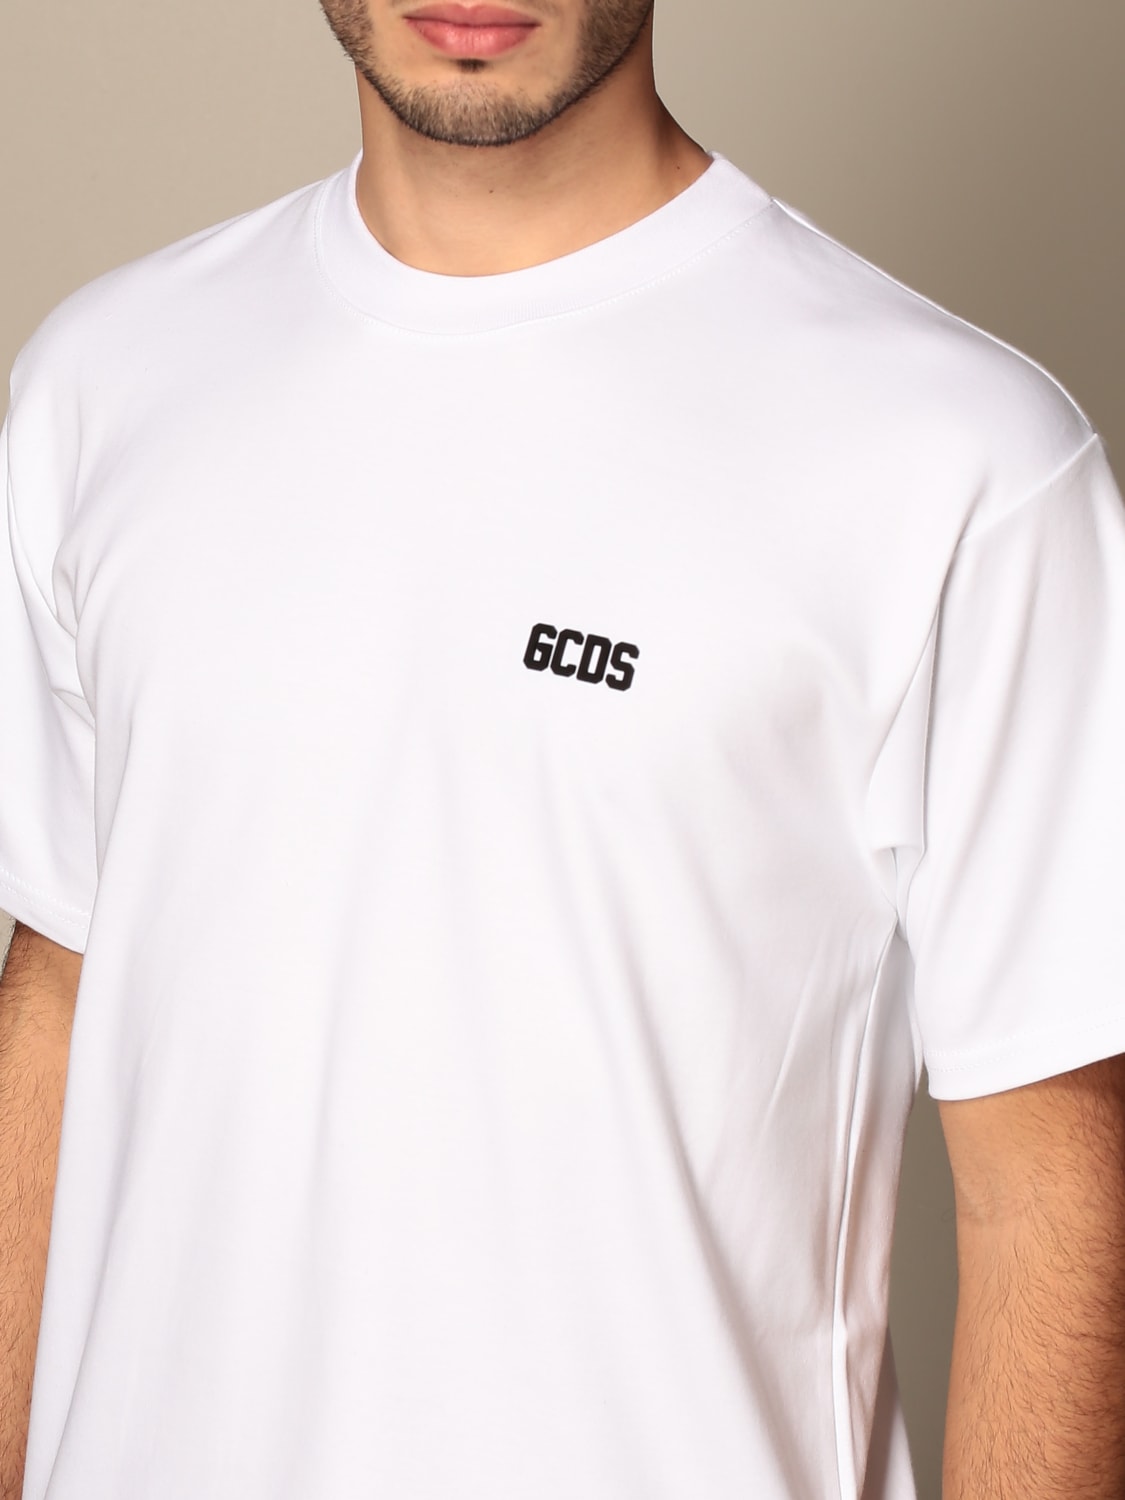 Gcds cotton t-shirt with logo